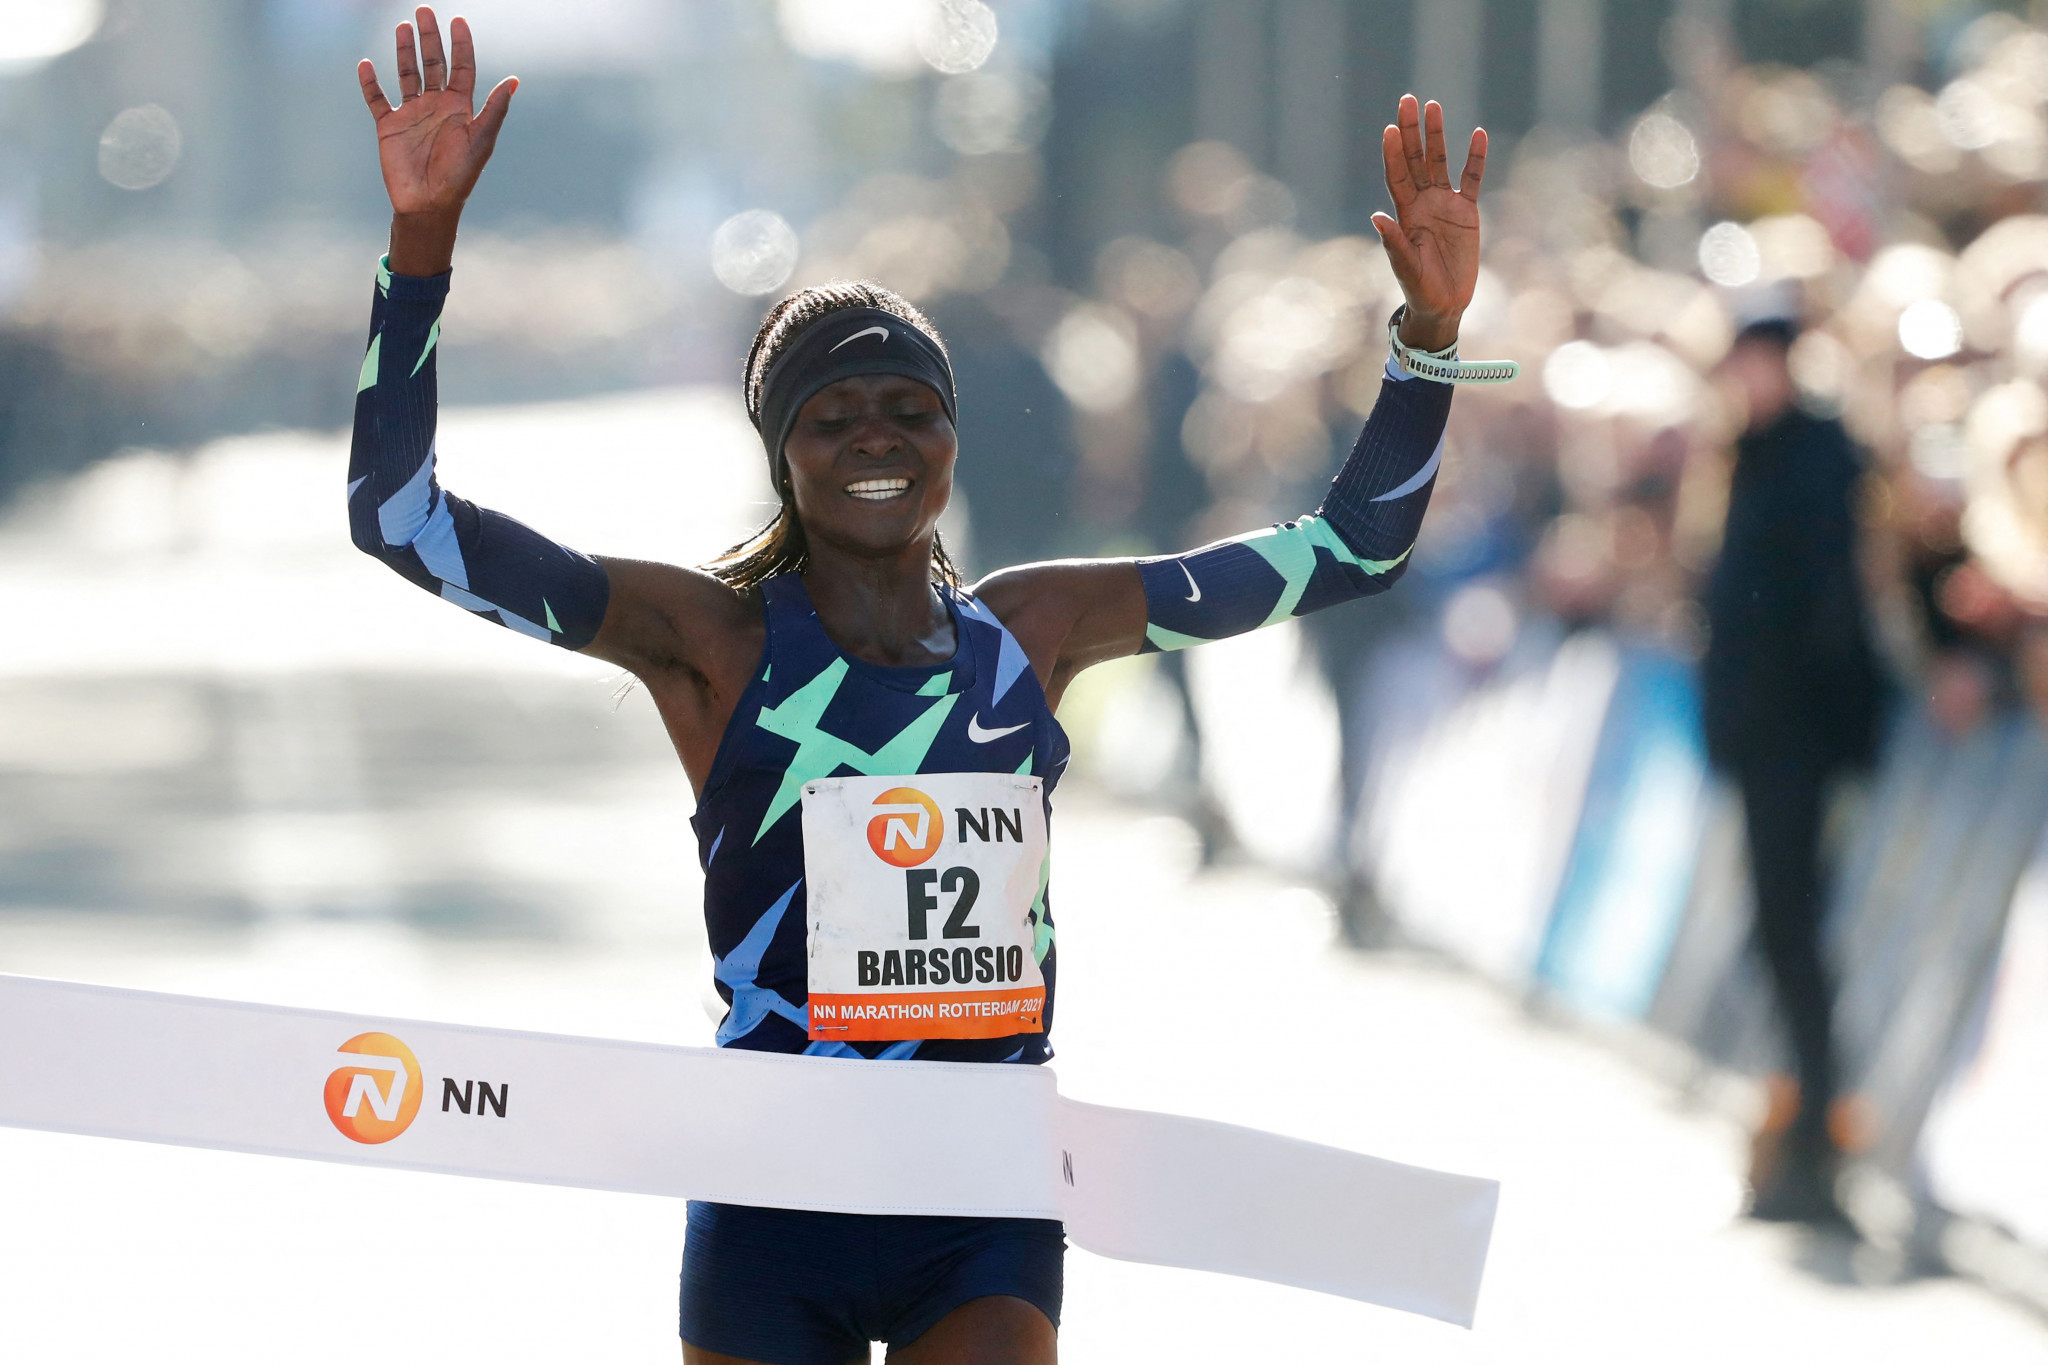 Stella Barsosio finished first at the Rotterdam Marathon last year ©Getty Images